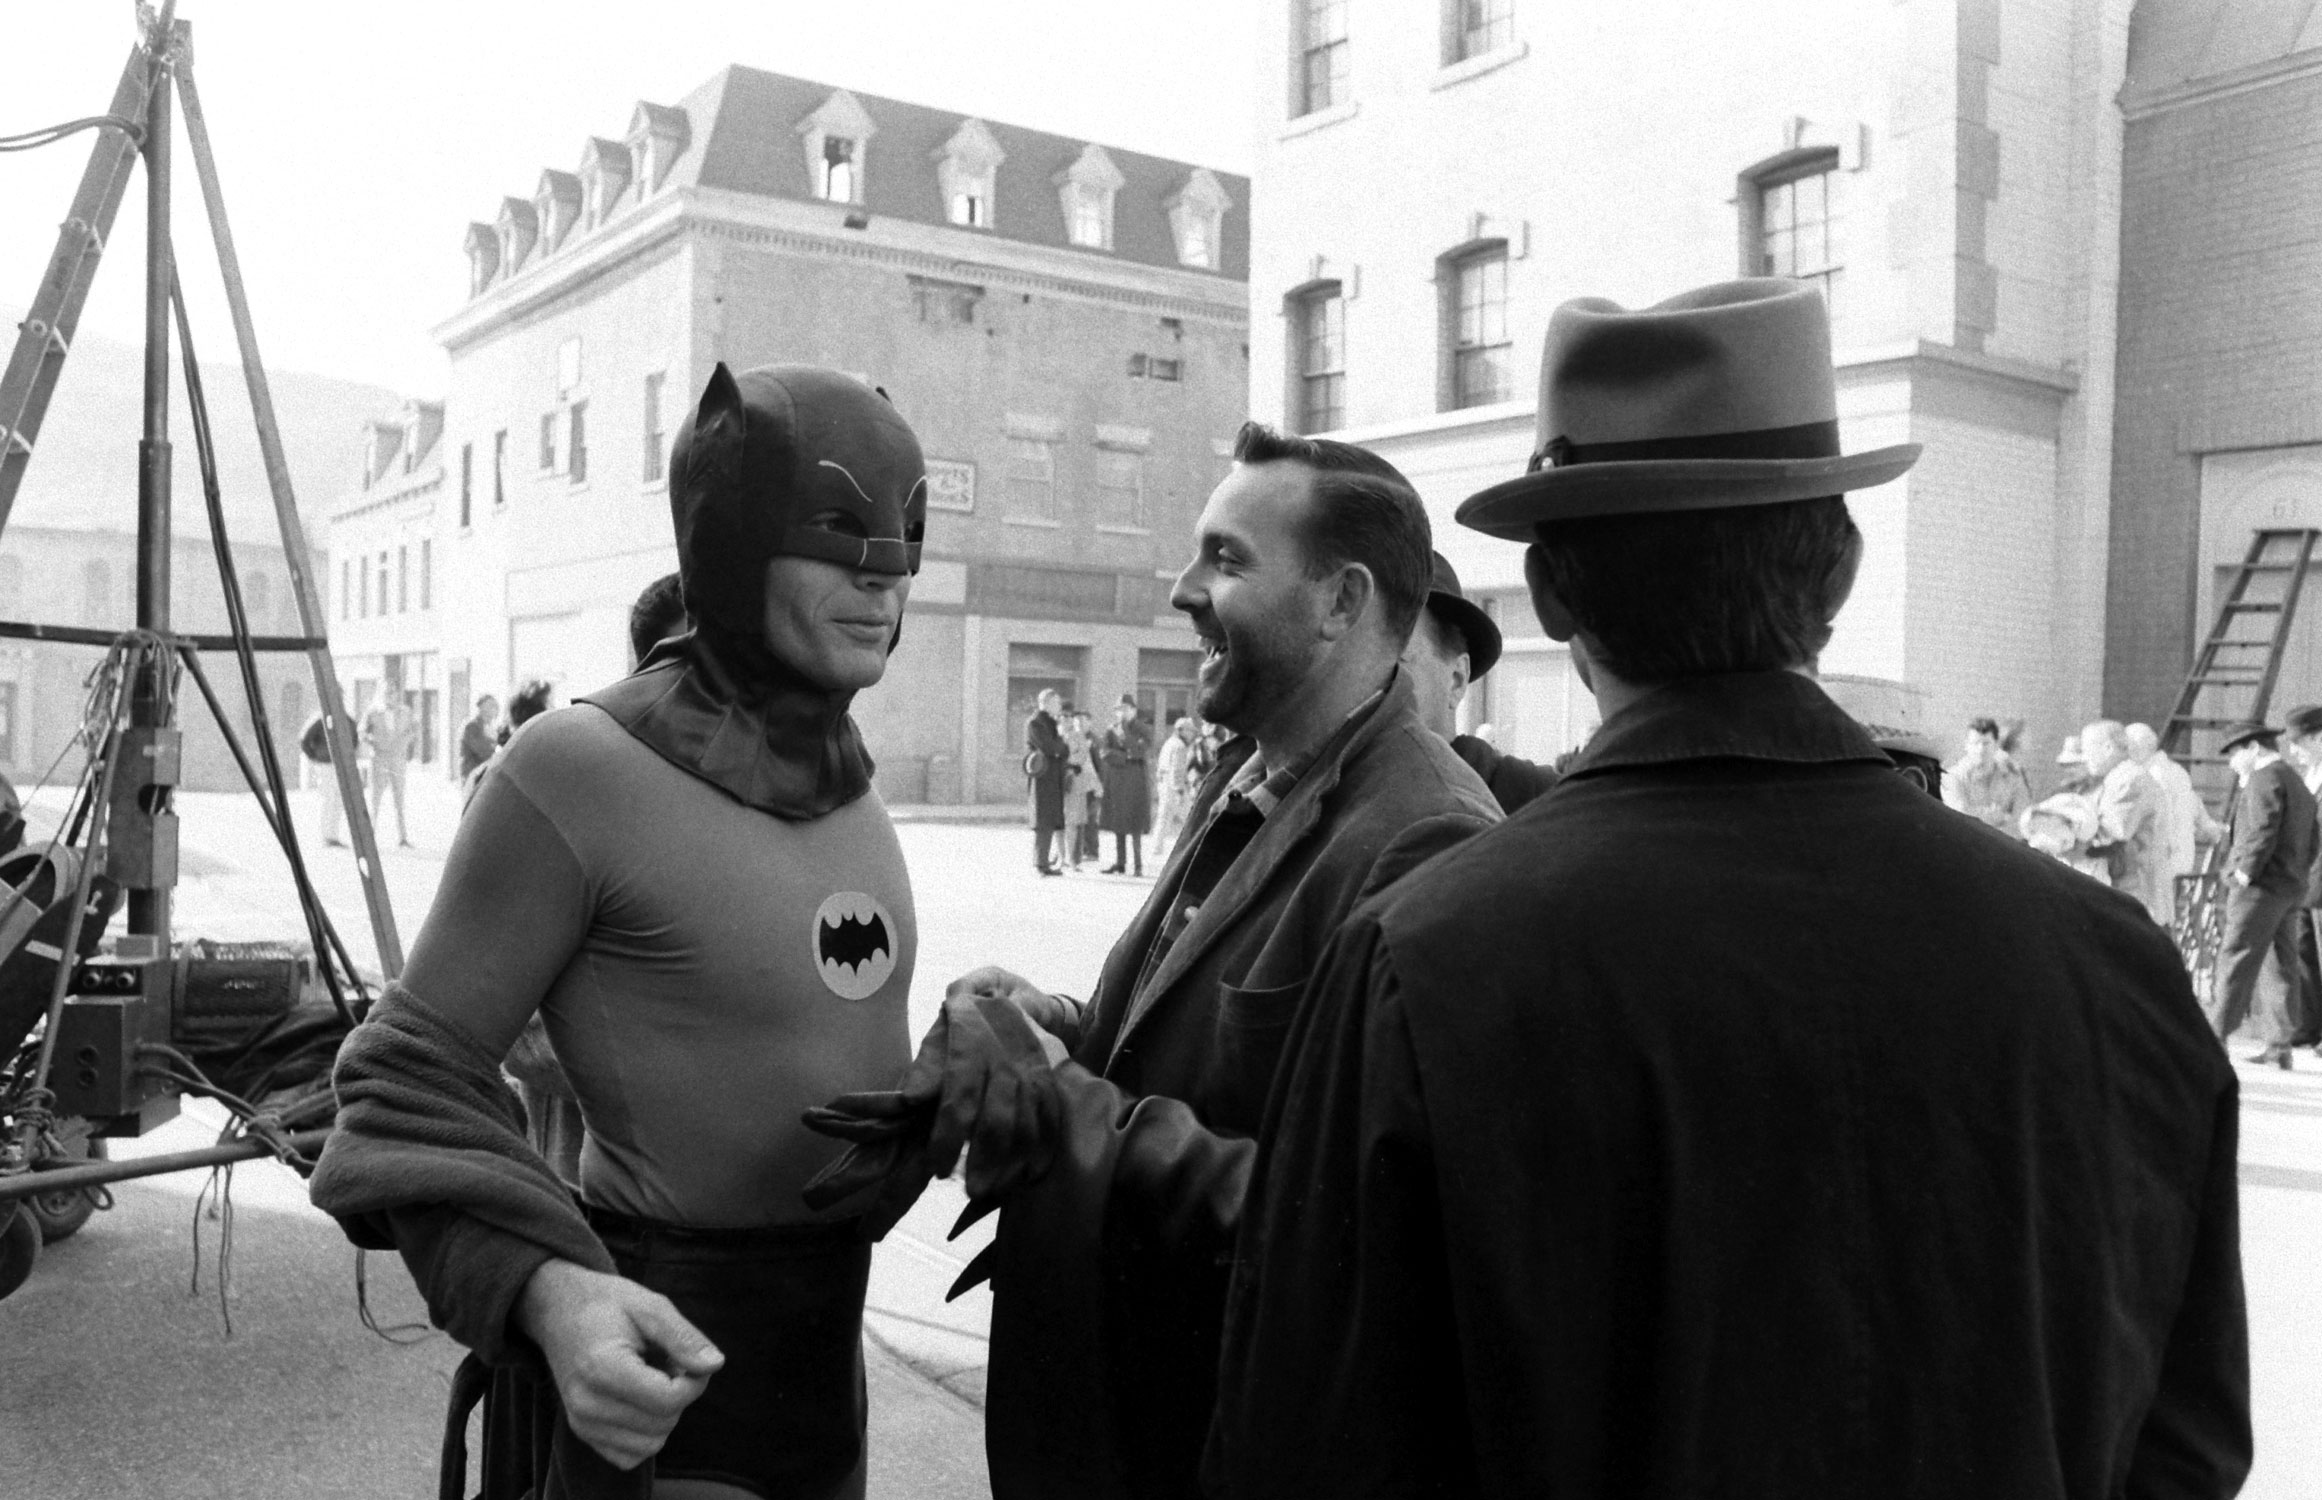 Adam West in costume on the set of Batman, 1966.